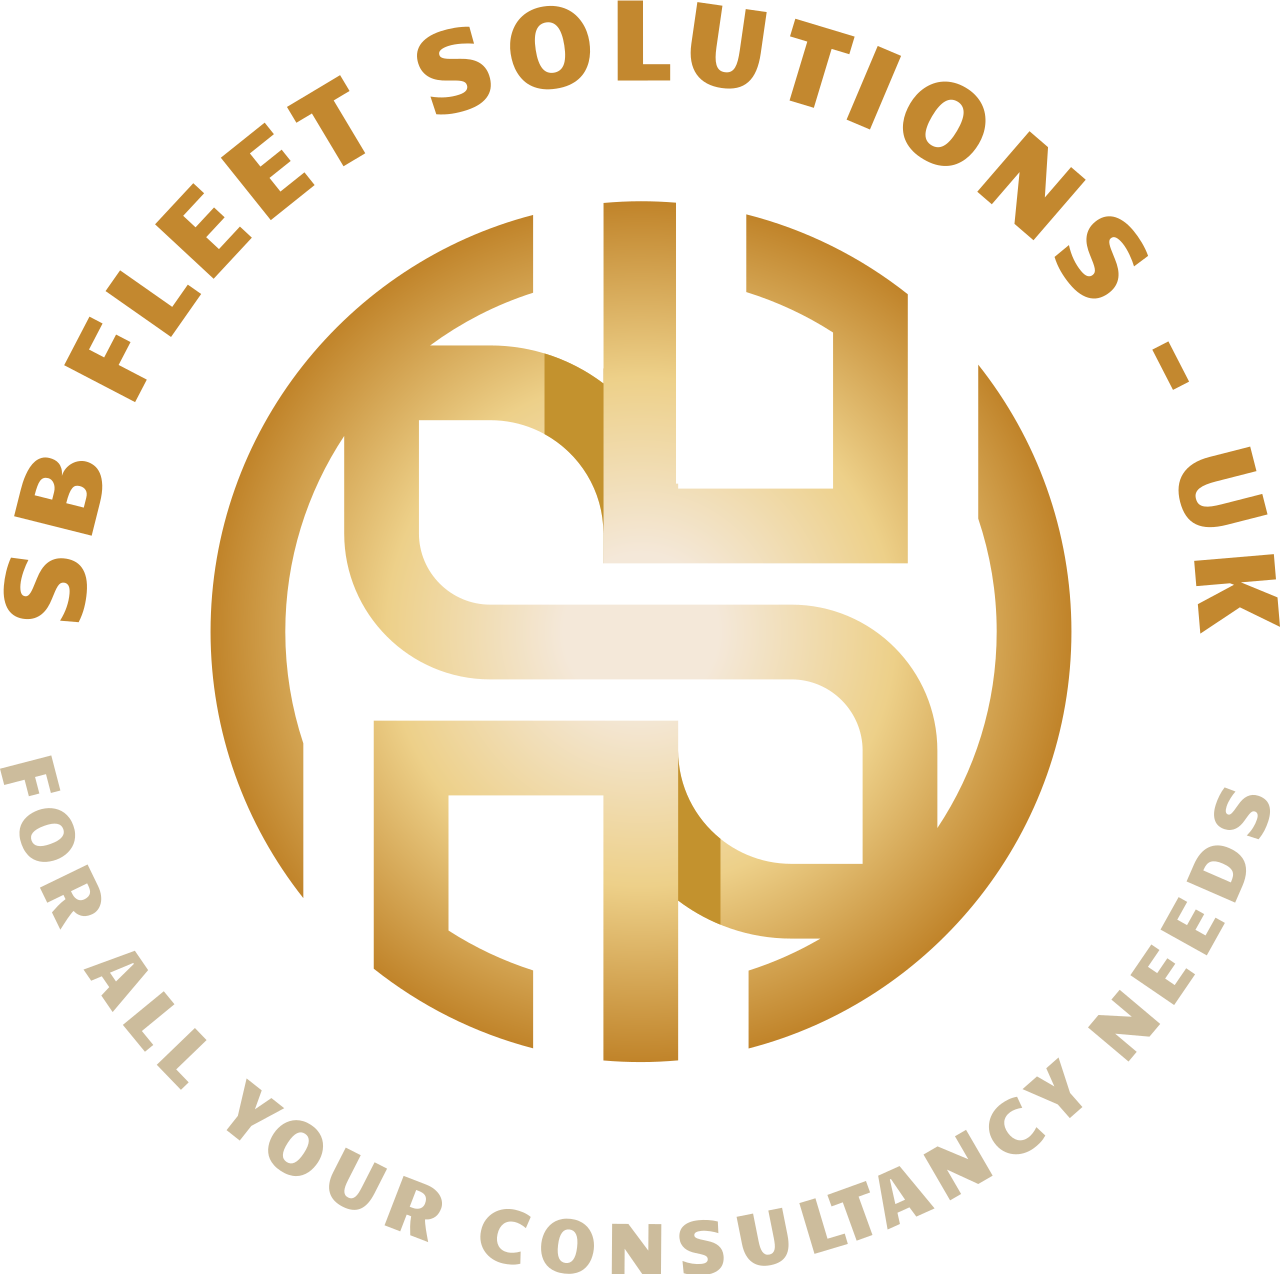 SB FLEET SOLUTIONS - UK's logo